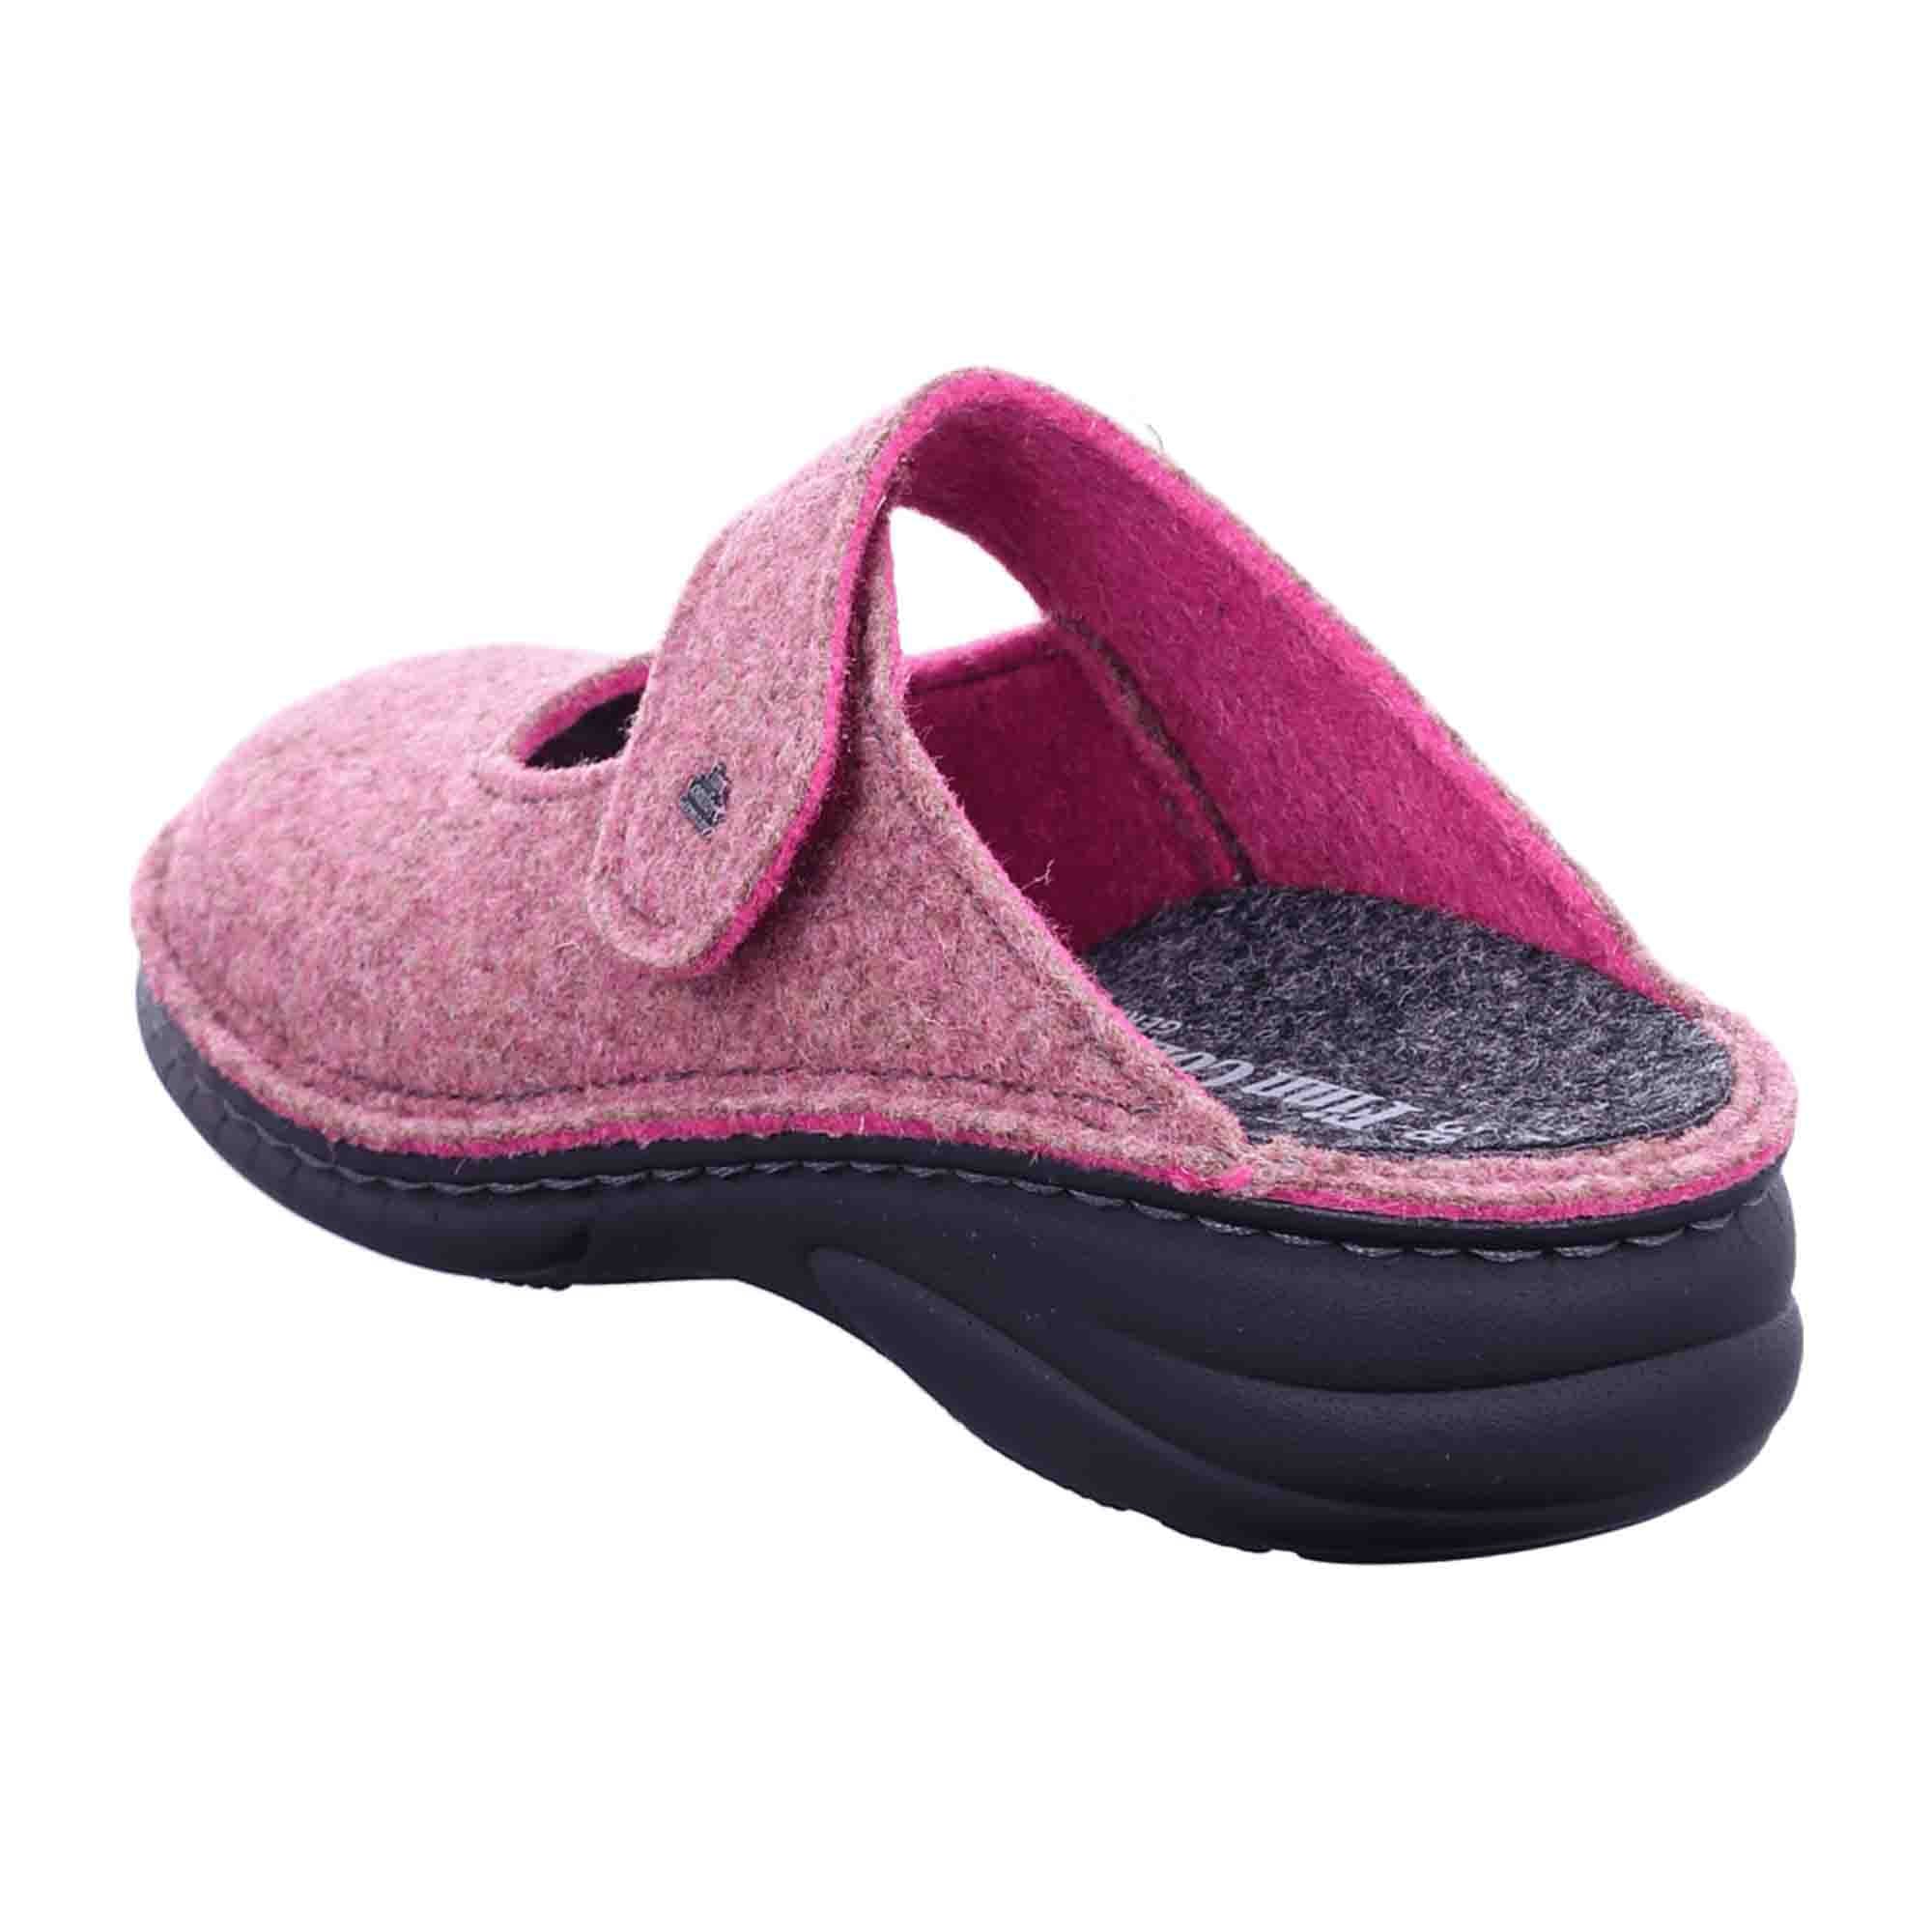 Finn Comfort Glarus Women's Comfortable Shoes in Trendy Pink